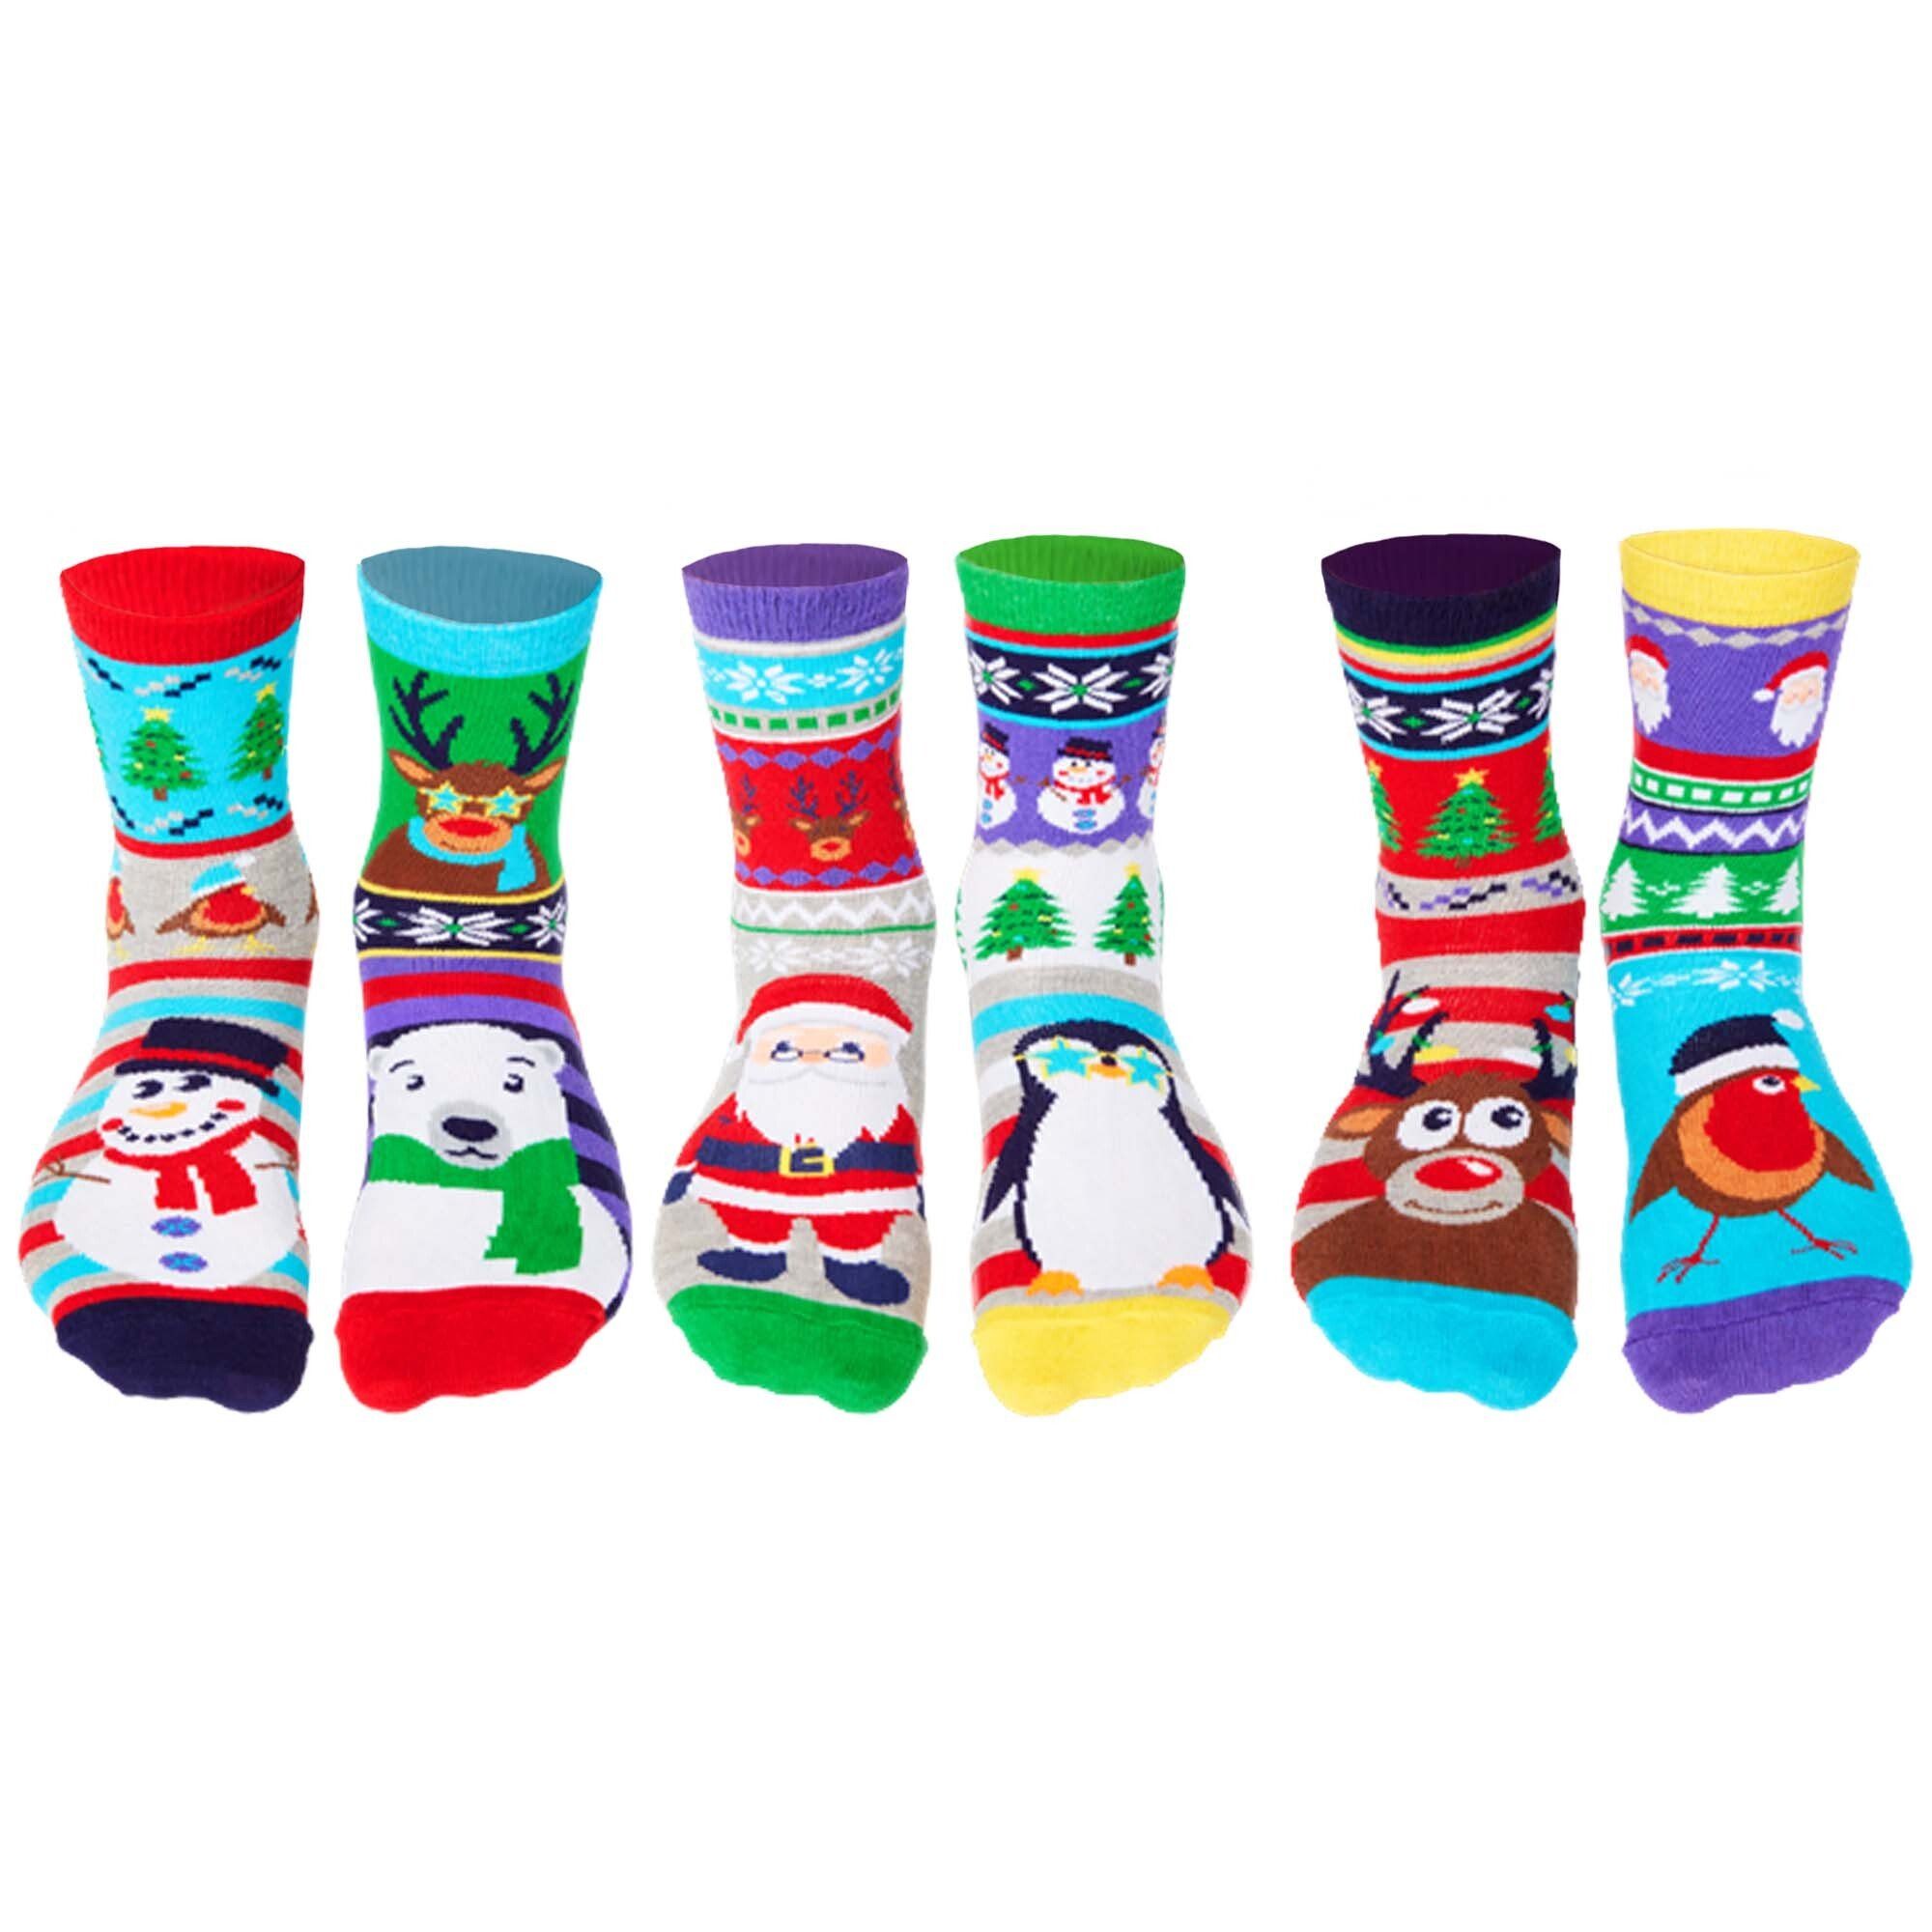 United Oddsocks Freizeitsocken Kinder Socken, 6 individuelle Socken - A Holly Jolly Christmas